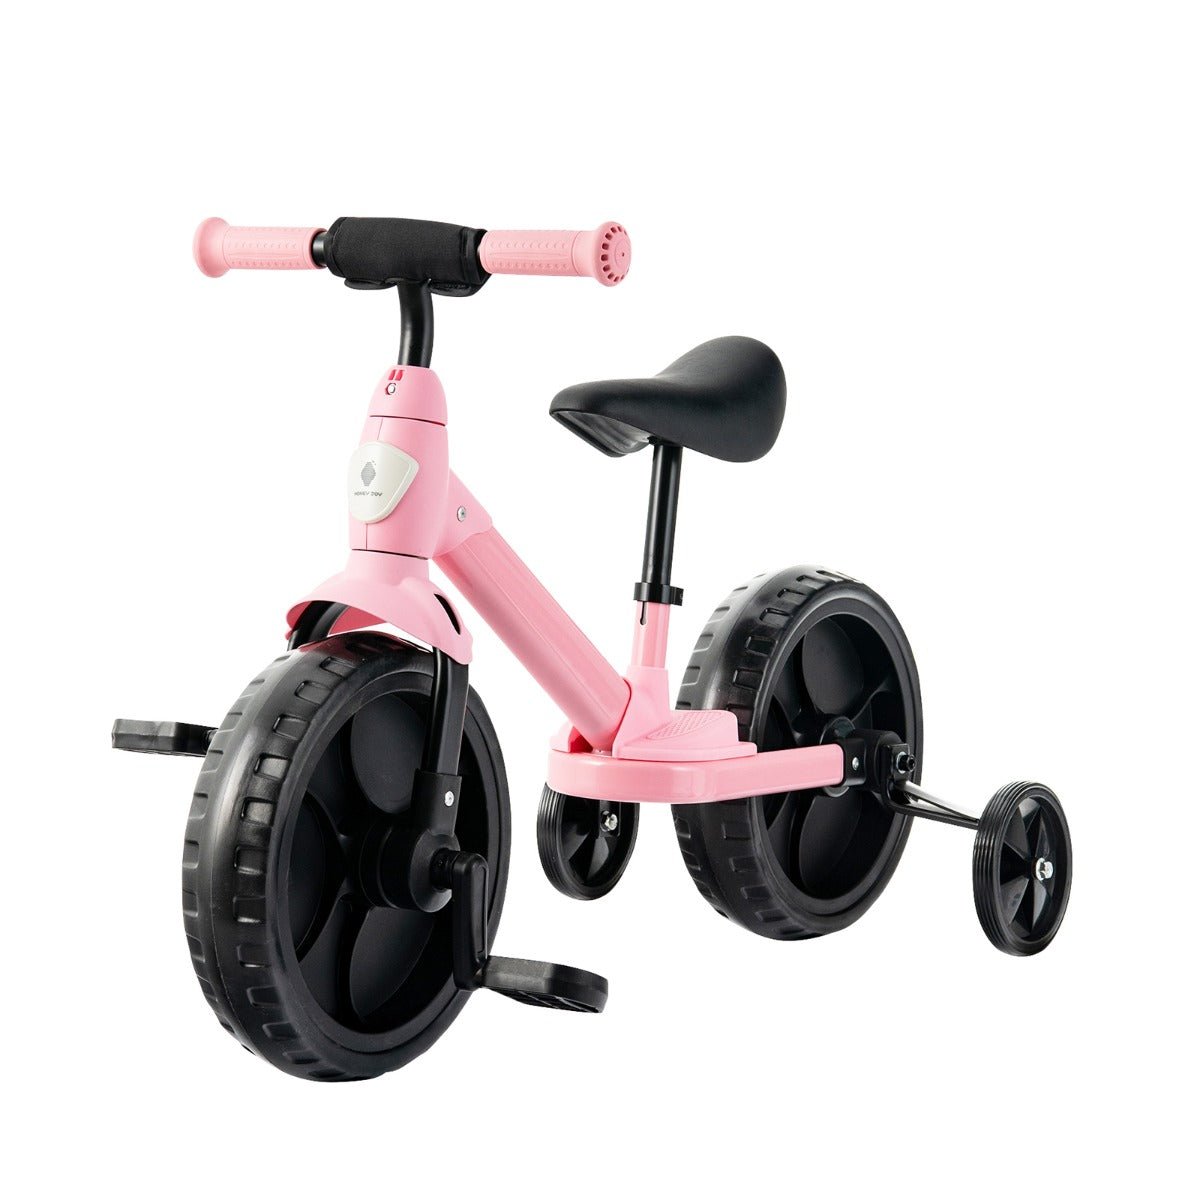 Pink Joyride: 4-in-1 Kids Training Bike with Training Wheels for Fun Adventures